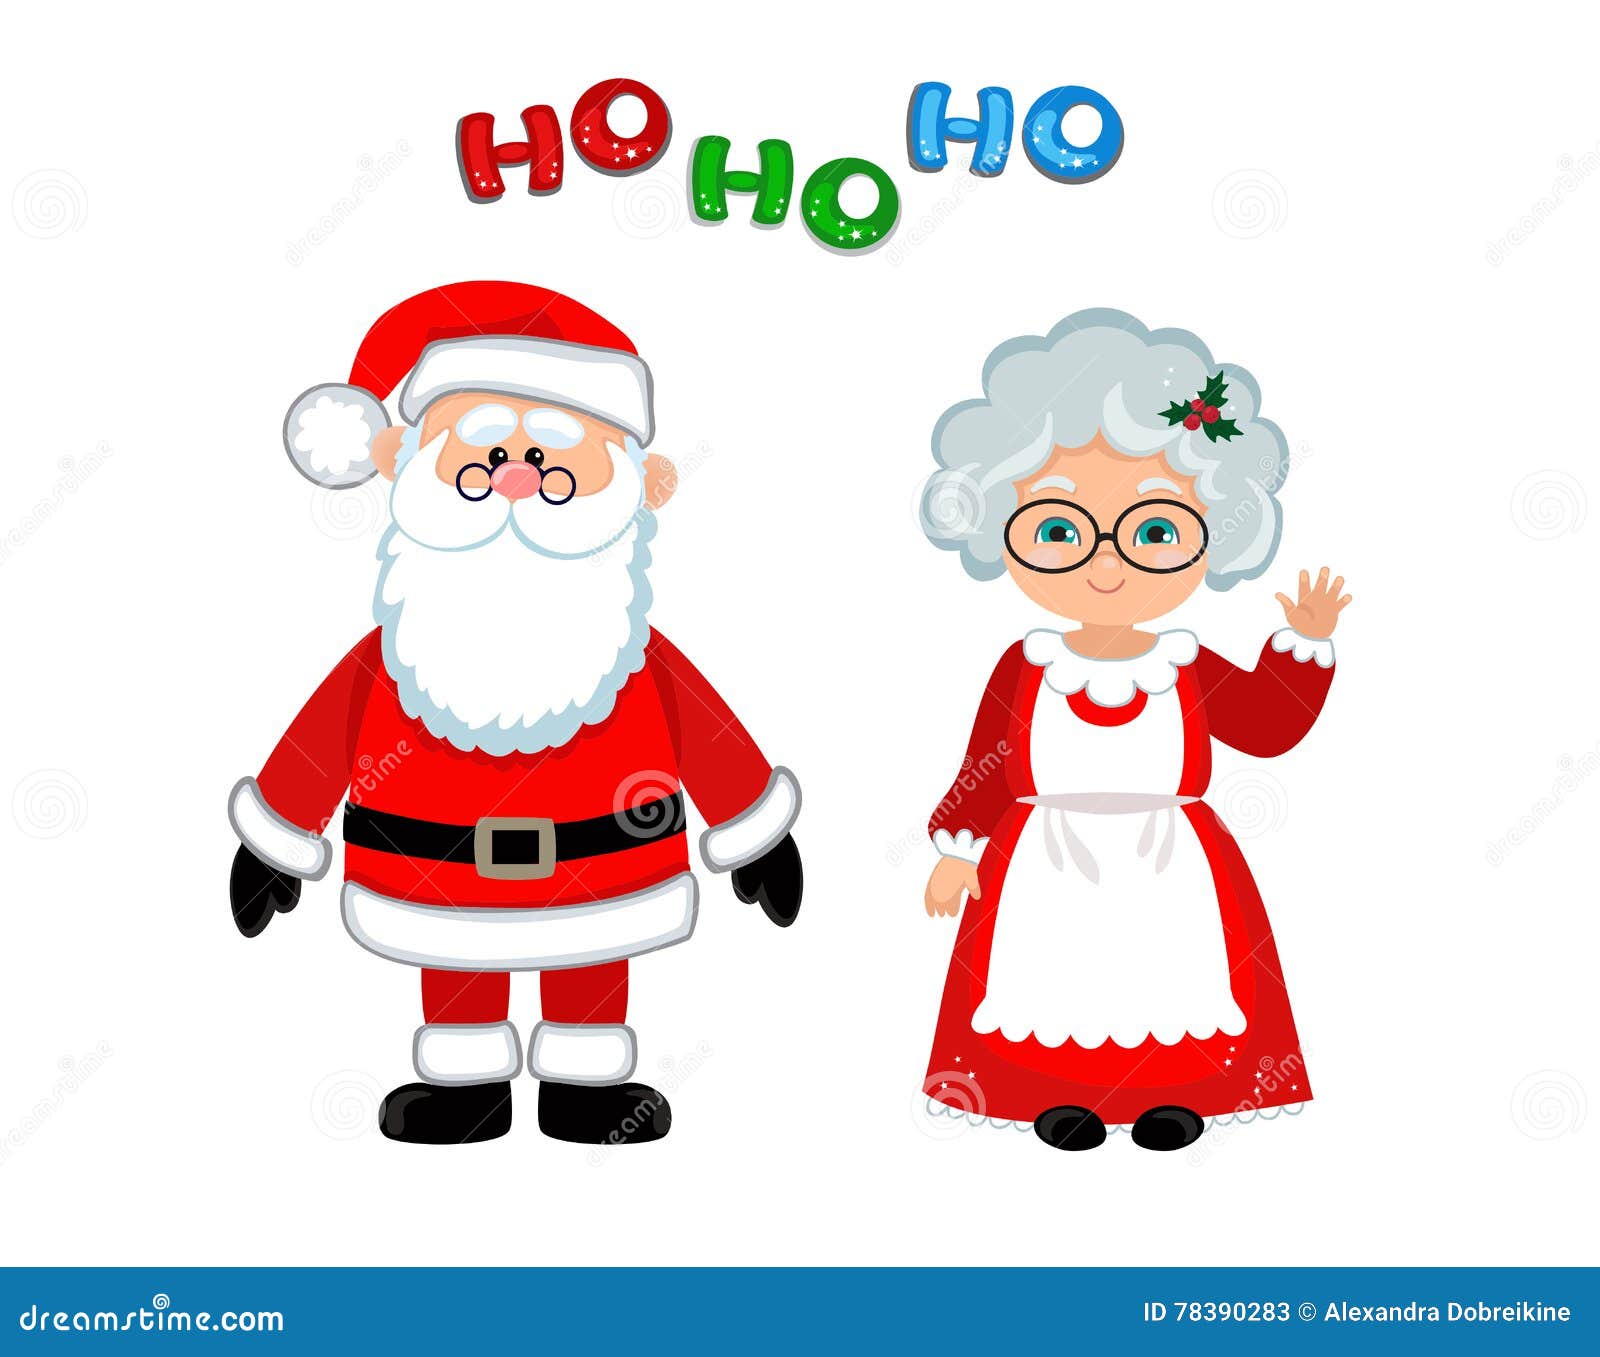 Mrs Santa Christmas Woman Cartoon Vector | CartoonDealer.com #22060099